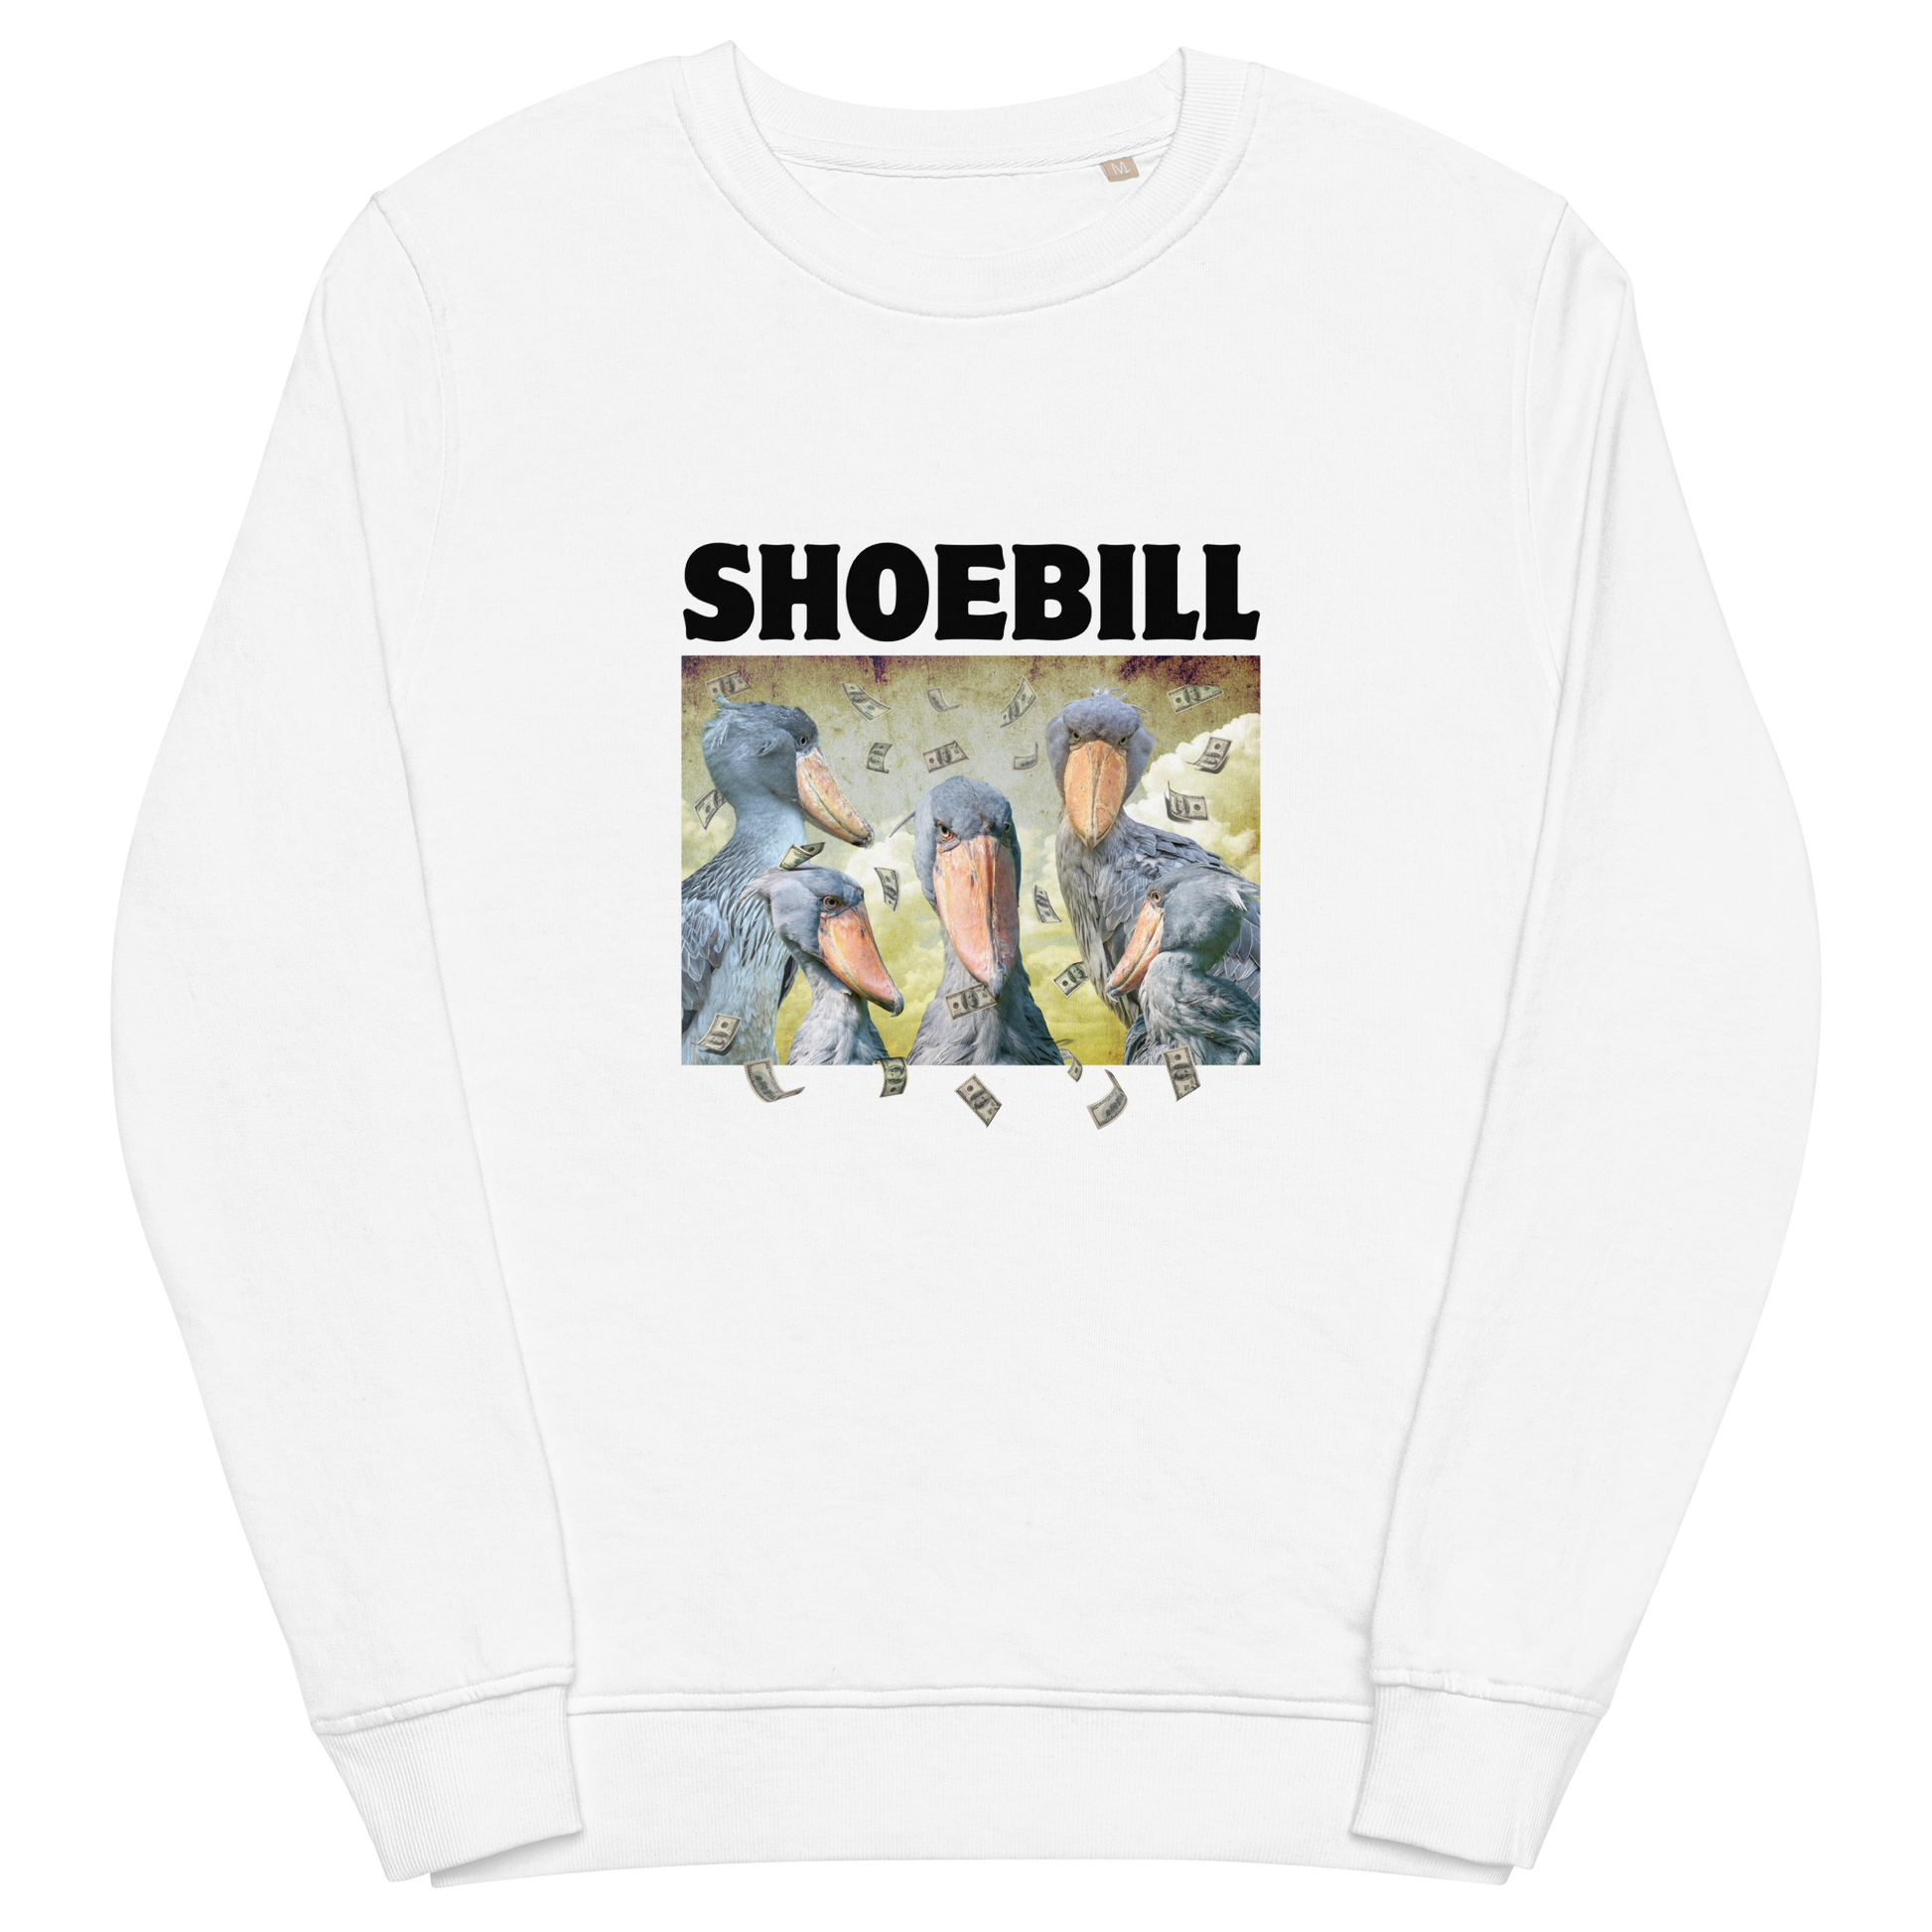 White Shoebill Organic Sweatshirt featuring a cool Shoebill graphic on the chest - ArtsyFunny Graphic Shoebill Stork Sweatshirts - Boozy Fox